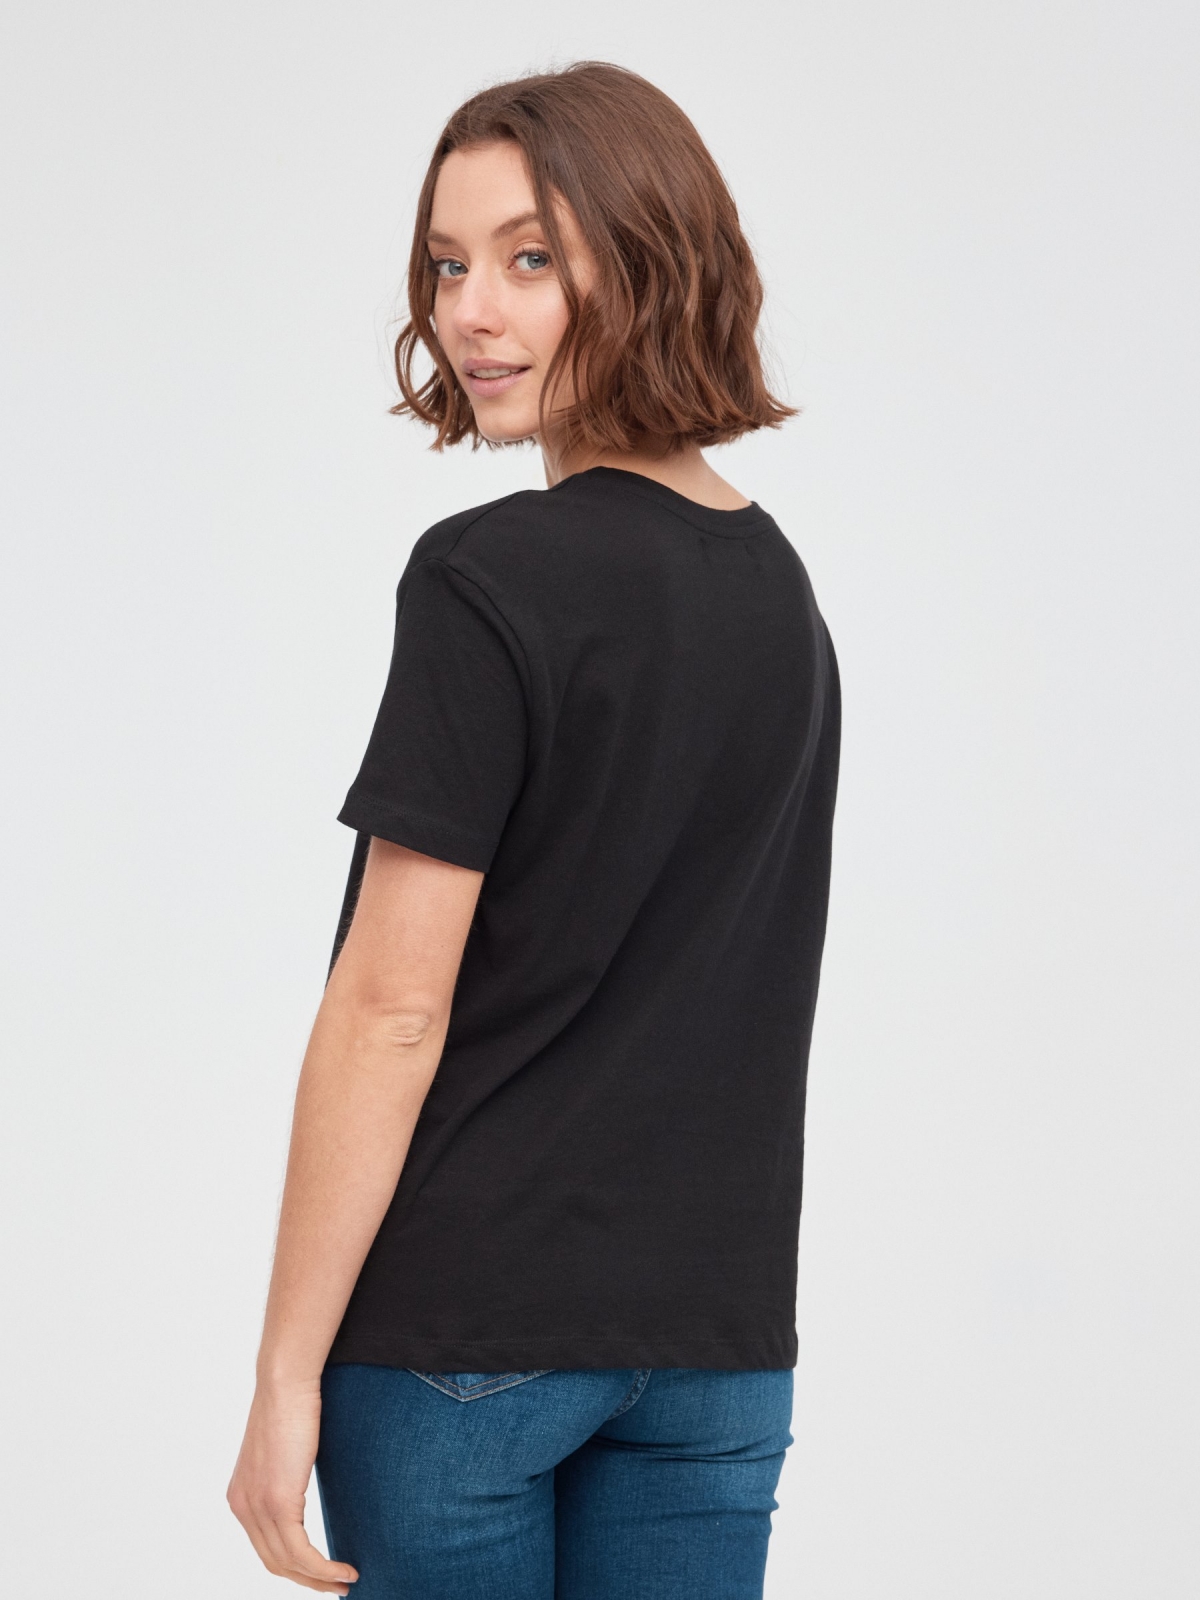 Oversize 3D cat t-shirt black middle back view